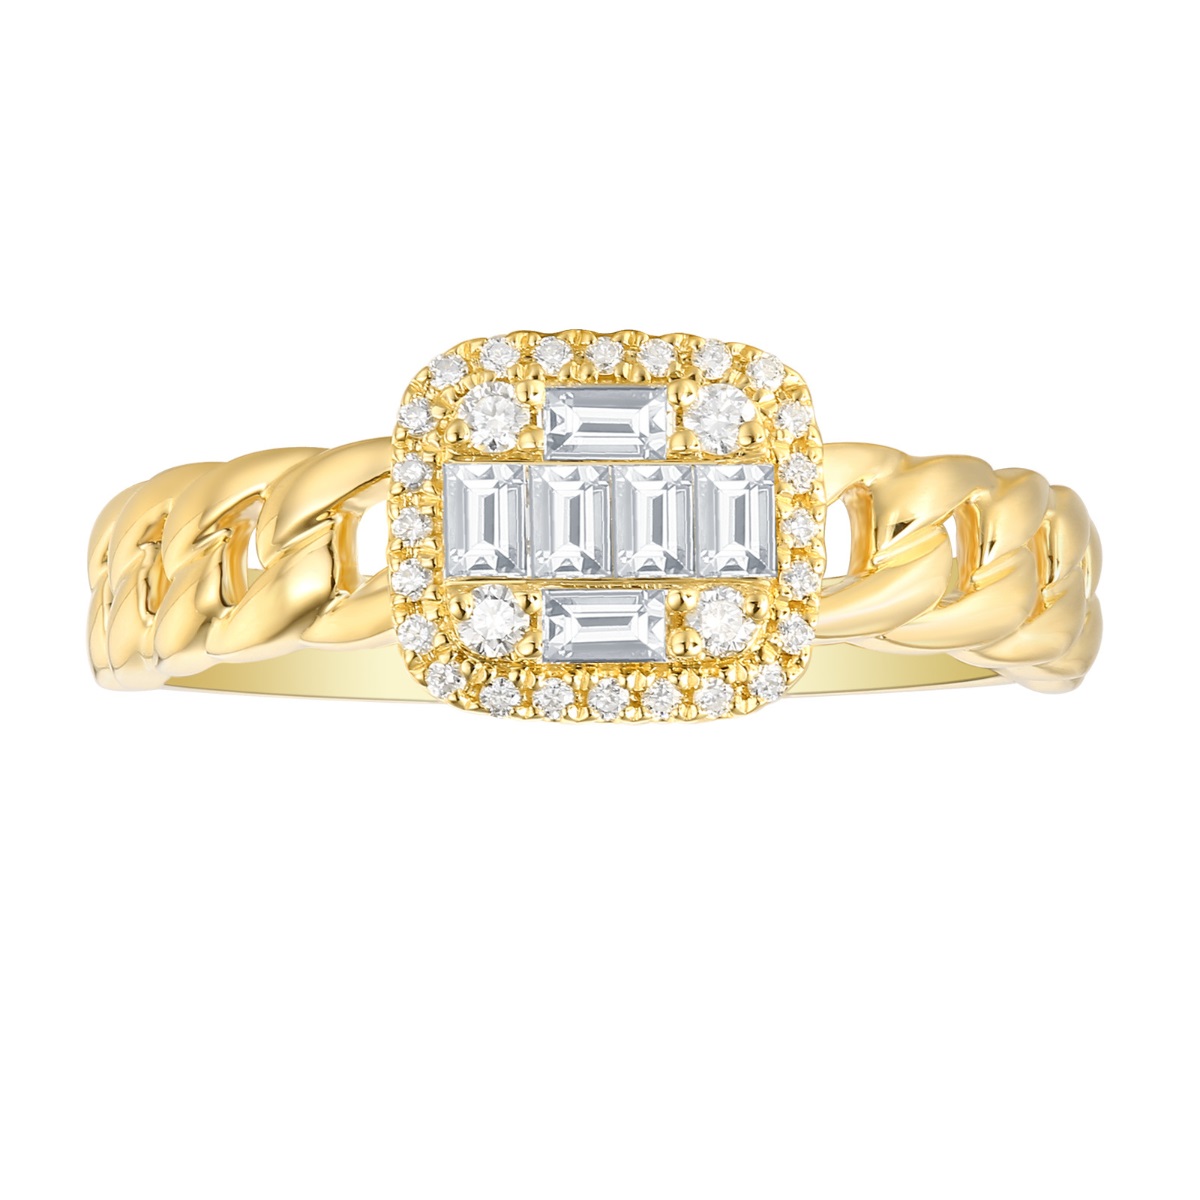 R36537WHT – 18K Yellow Gold  Diamond Ring, 0.34 TCW